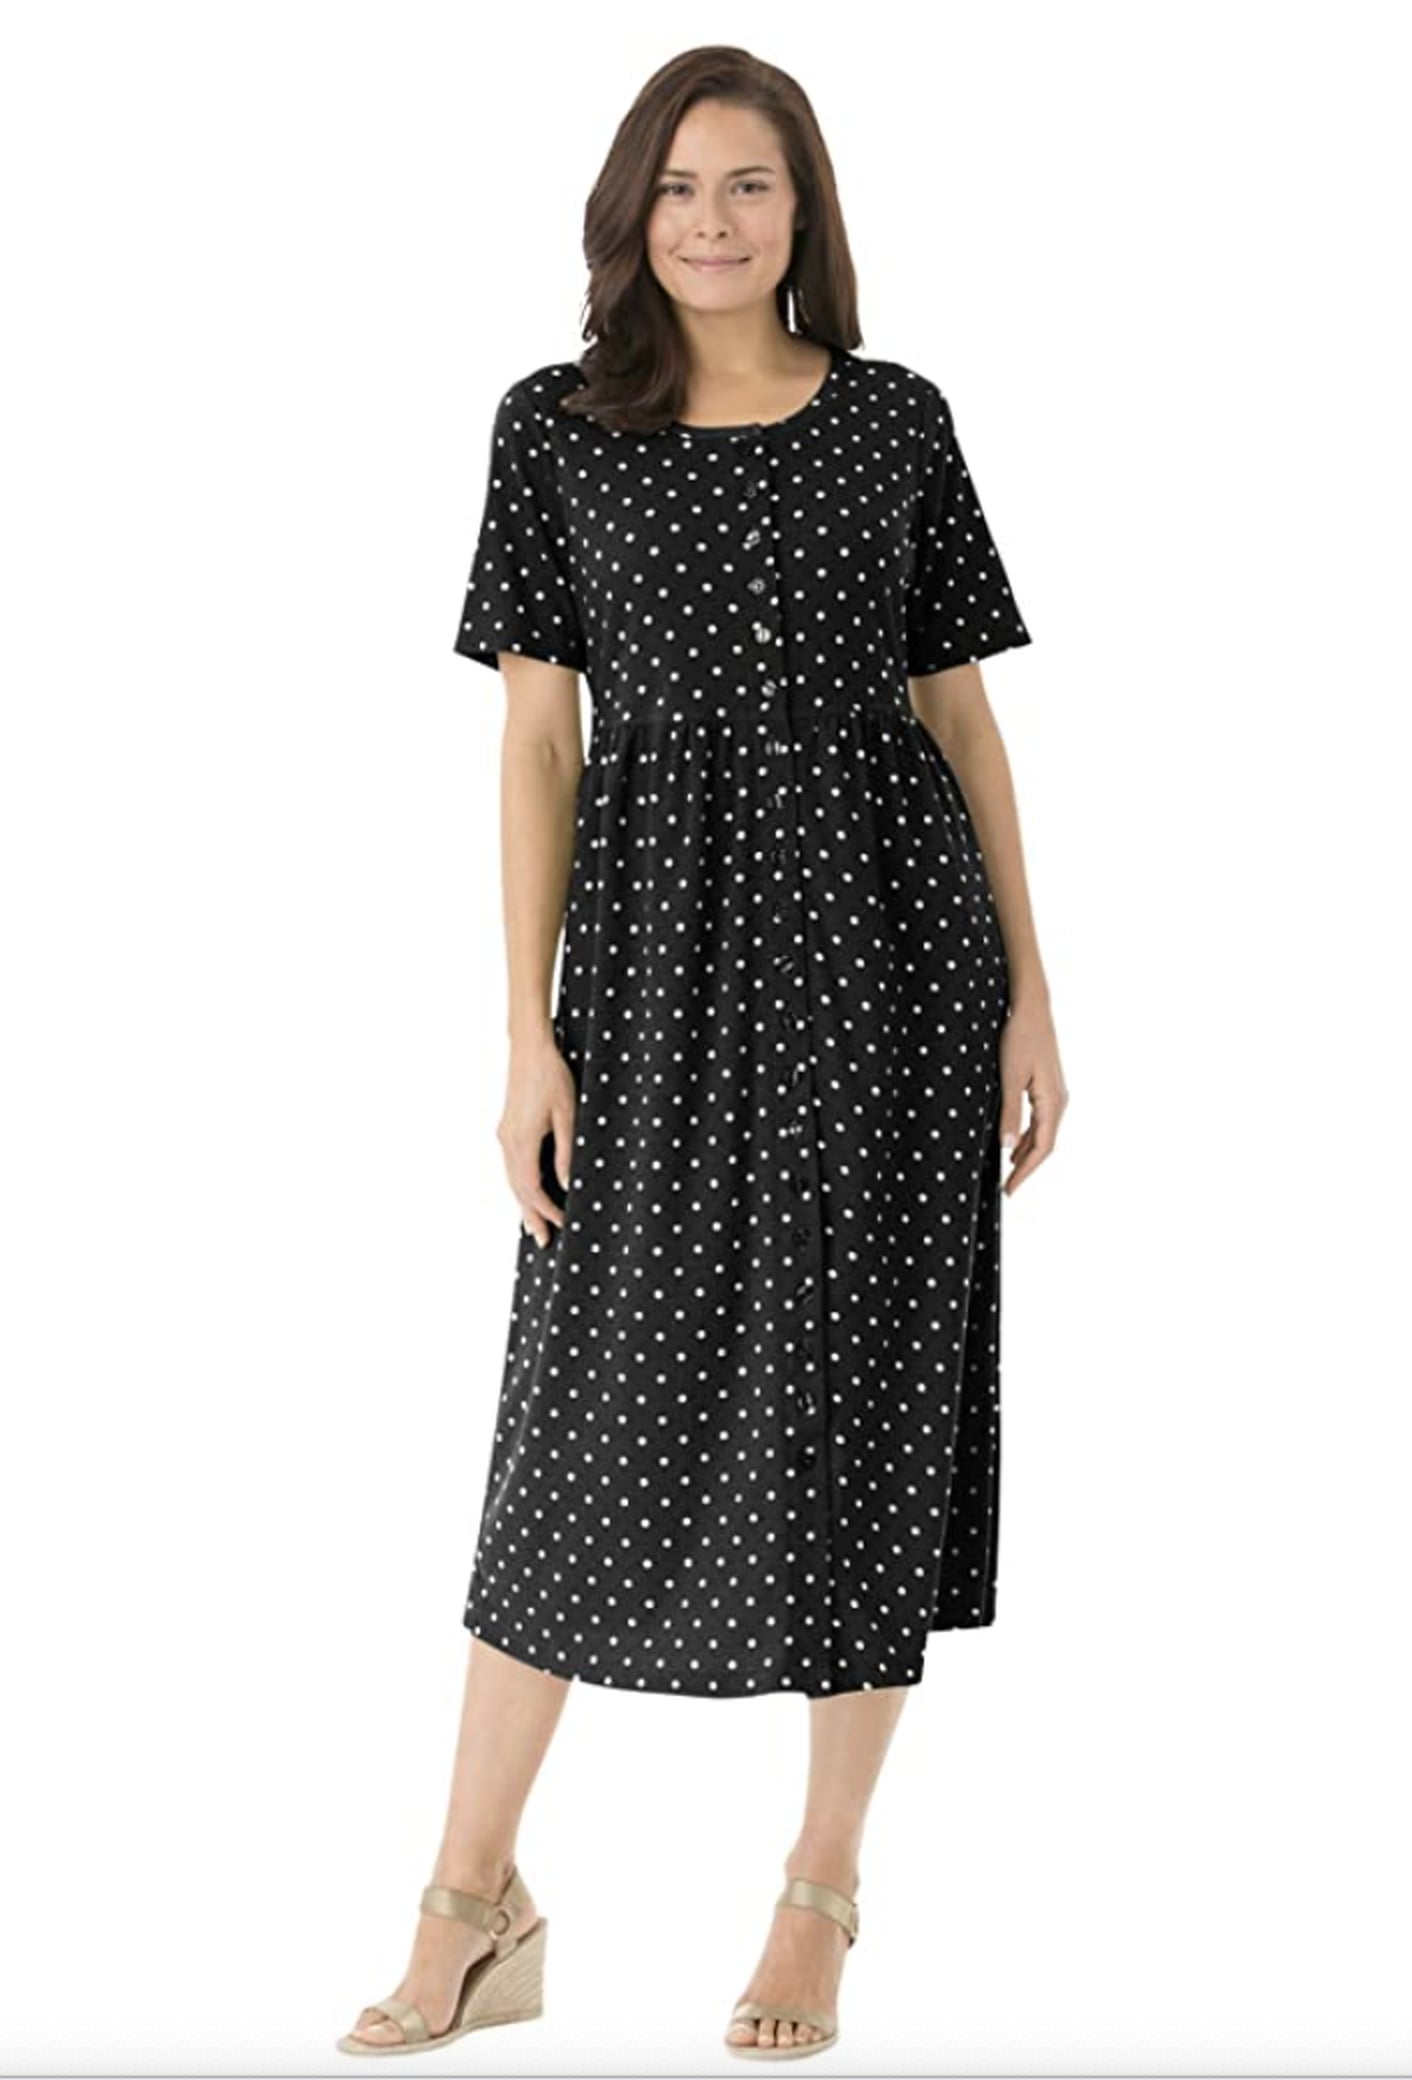 Stylish Polka-Dot Dresses on Amazon | POPSUGAR Fashion